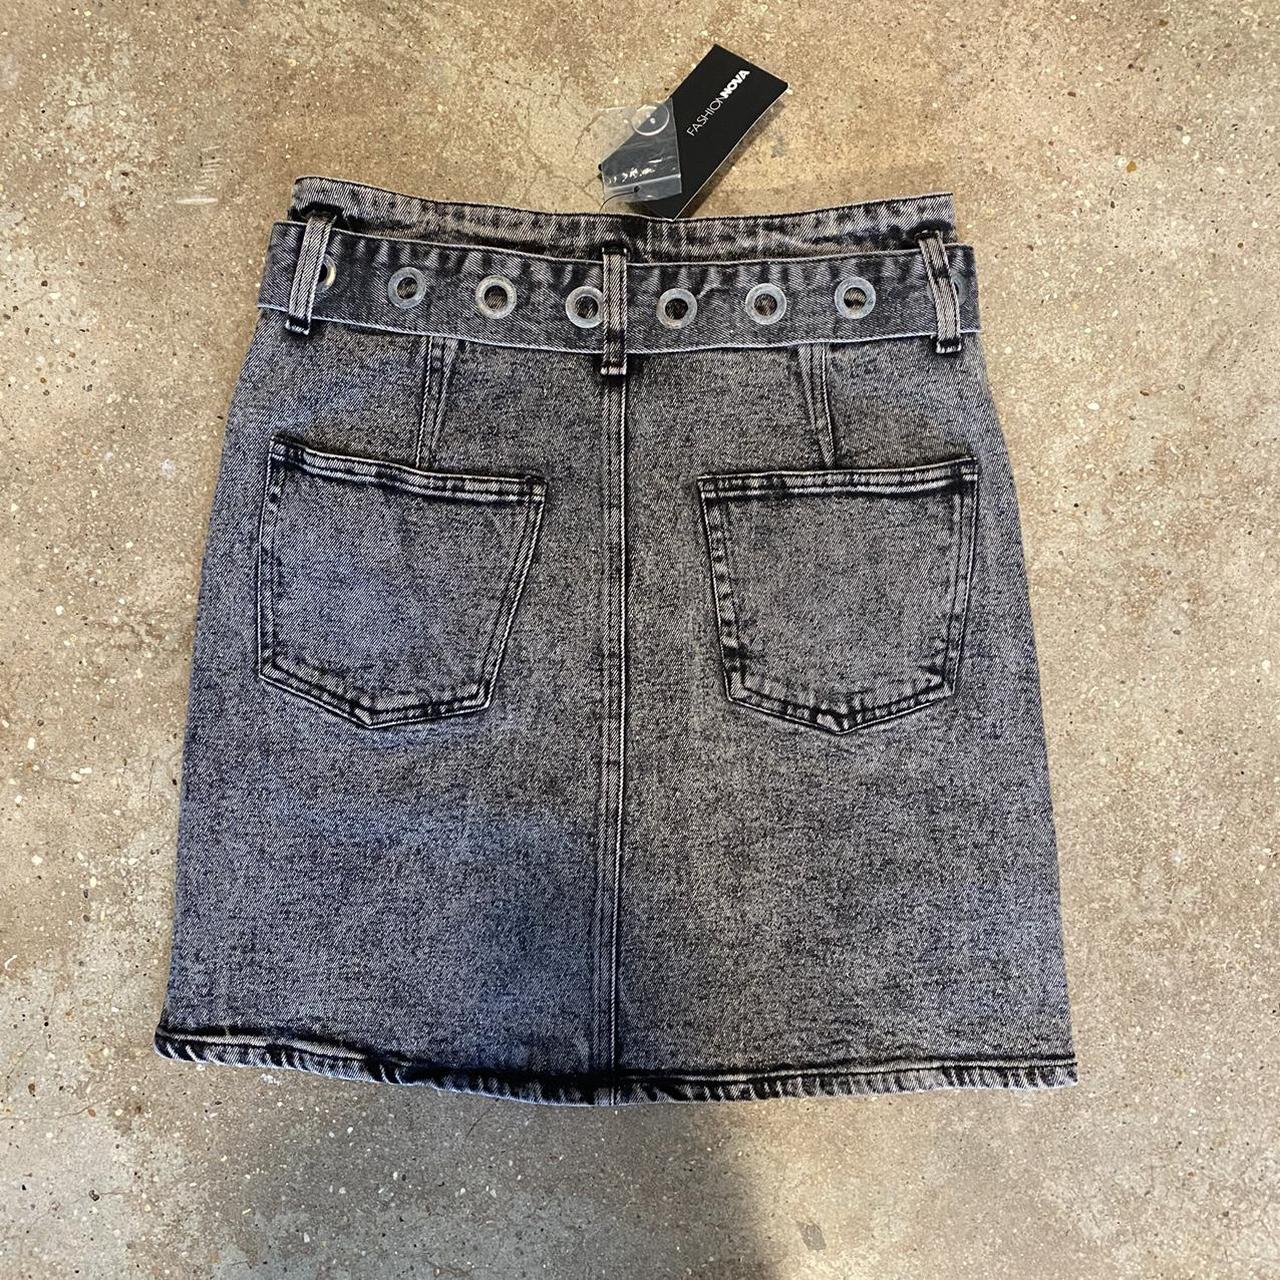 Product Image 2 - Denim Mini Skirt
Fashion Nova
Acid Wash
New